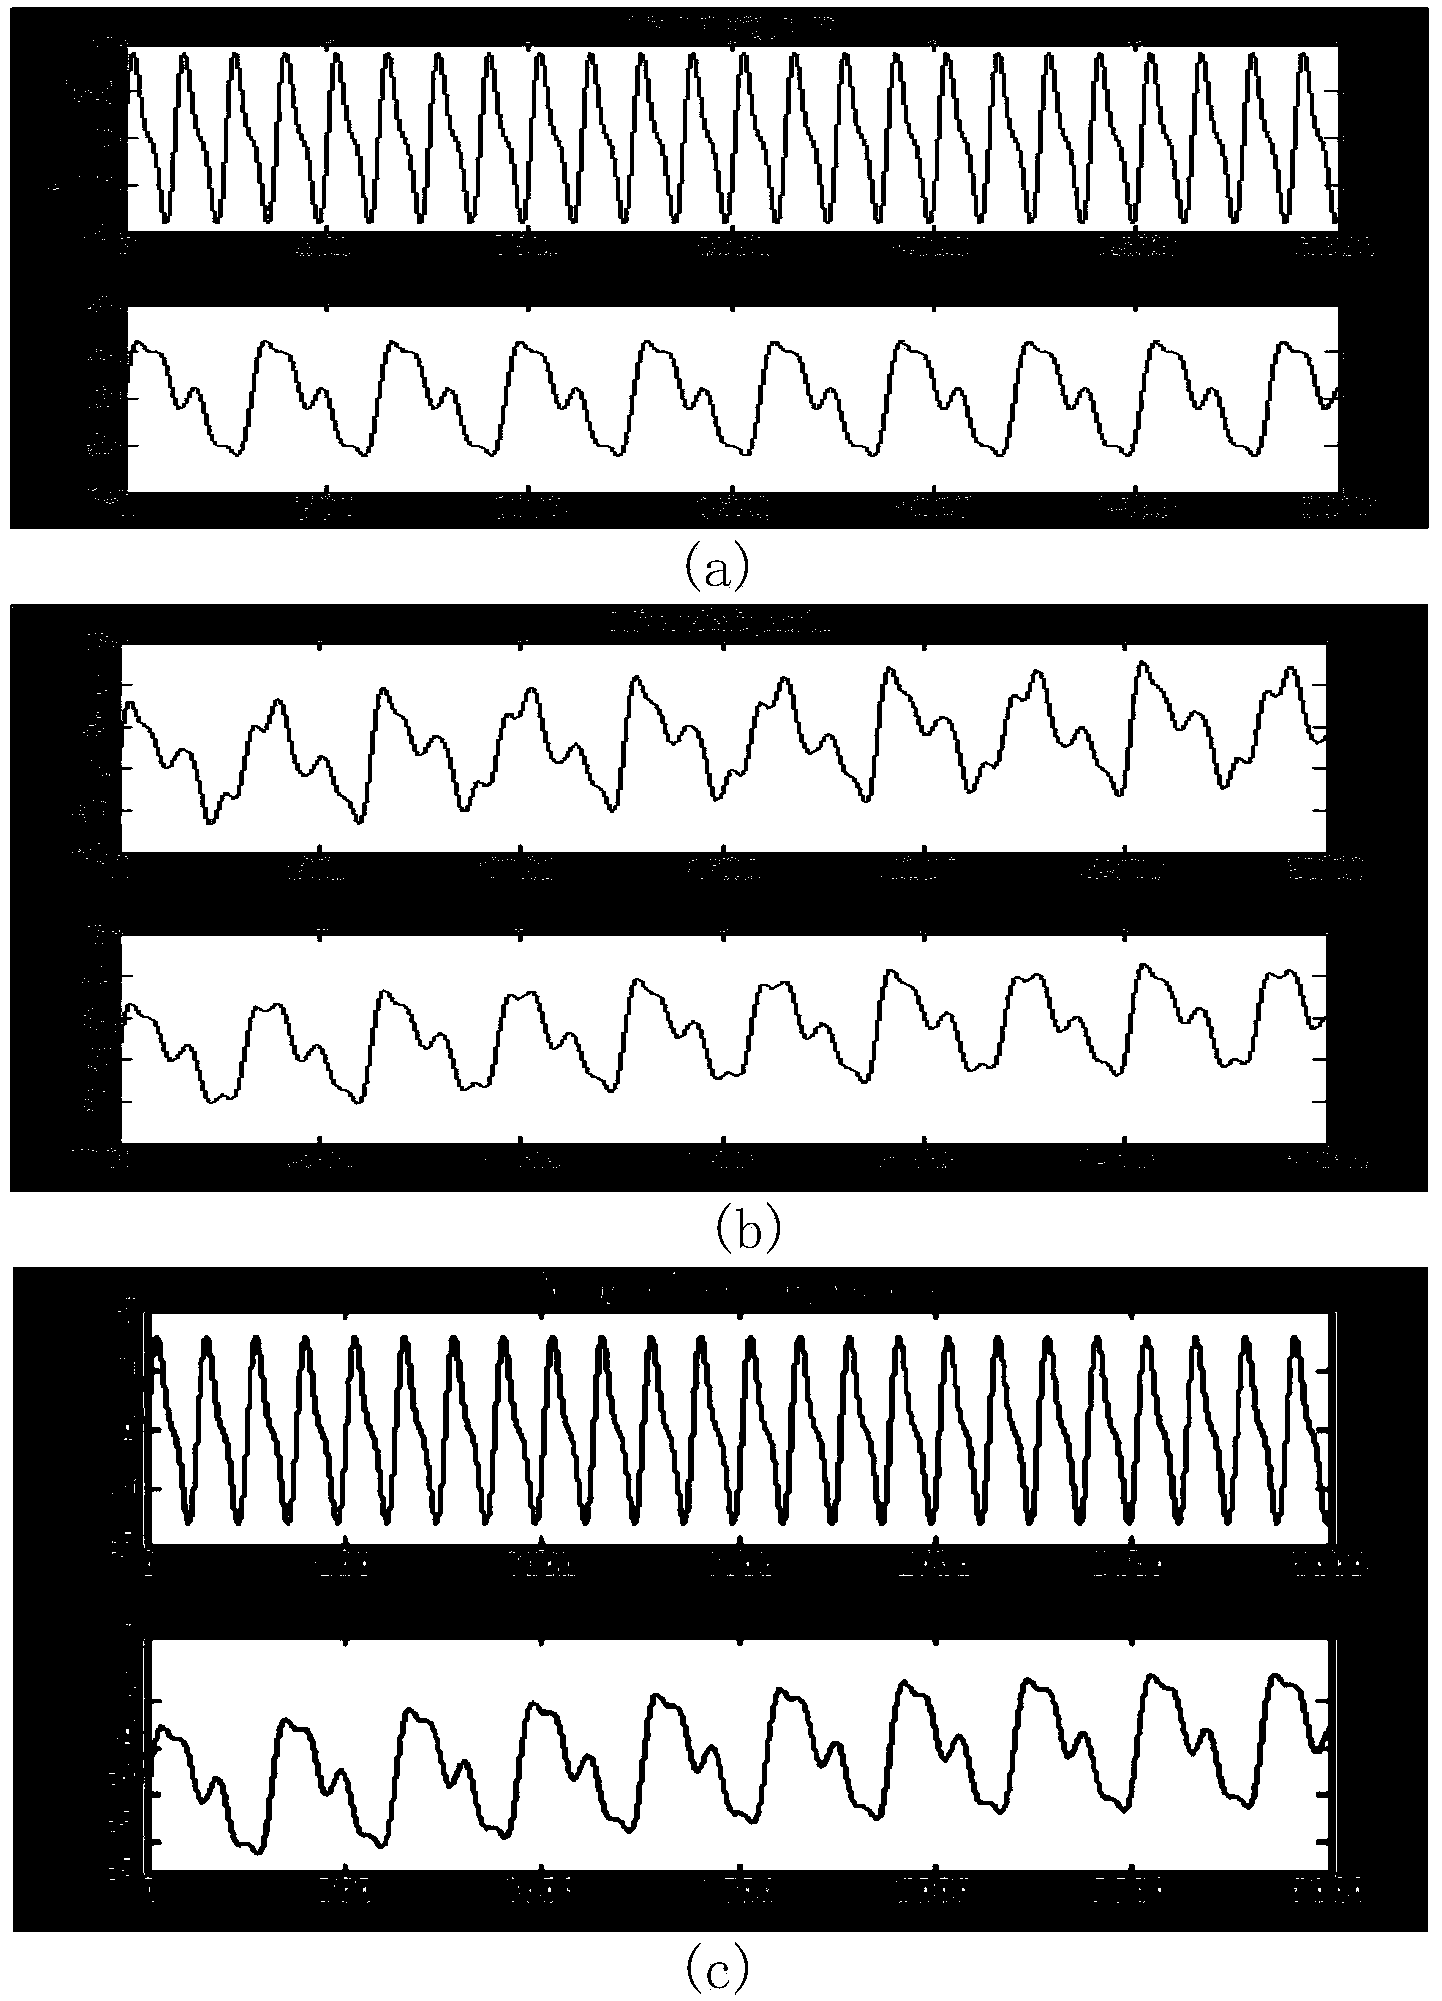 Magnetic induction cardiopulmonary activity signal separation method based on Fast-ICA method